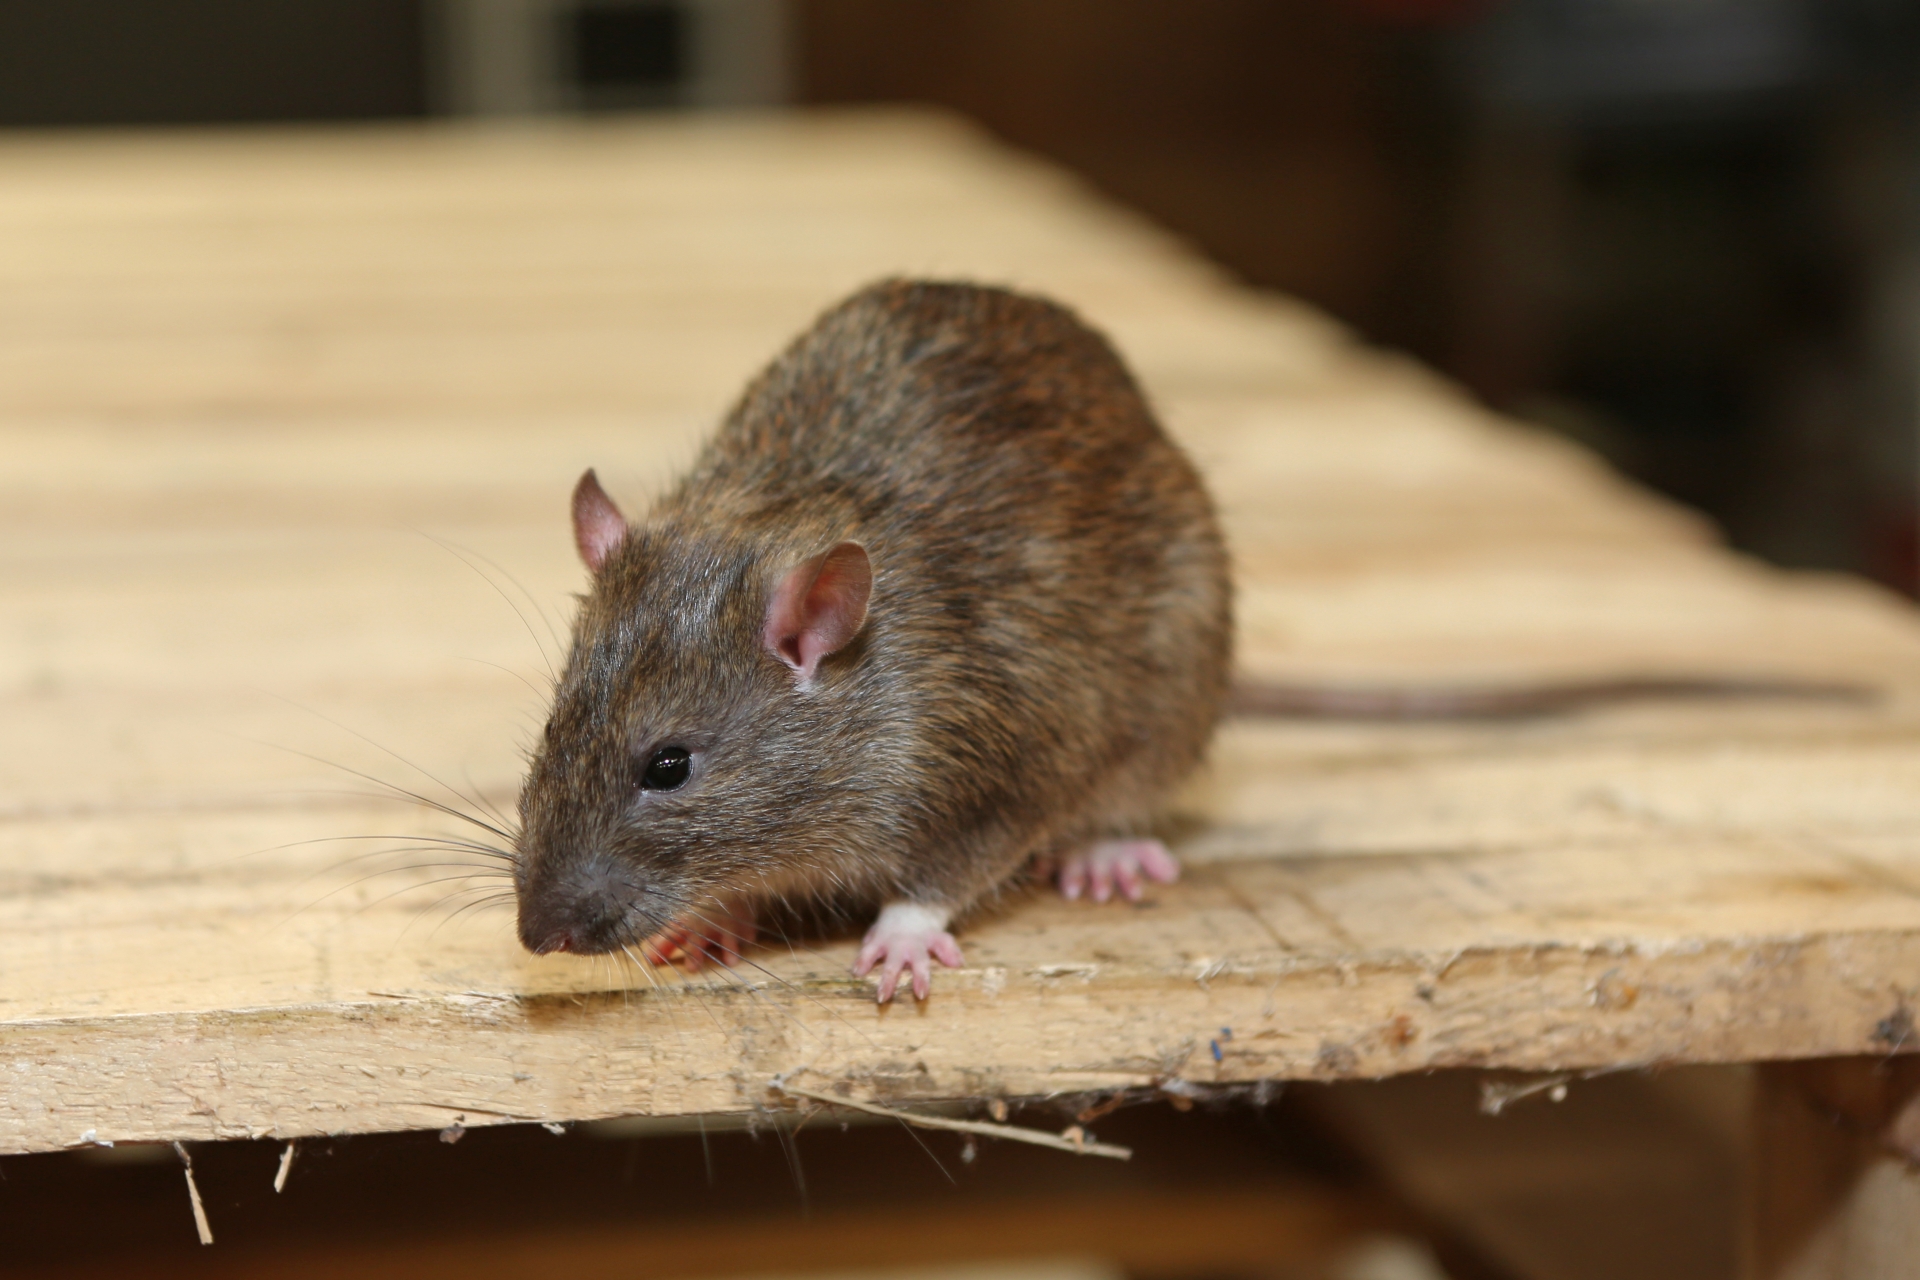 Rat extermination, Pest Control in Bexley, DA5. Call Now 020 8166 9746